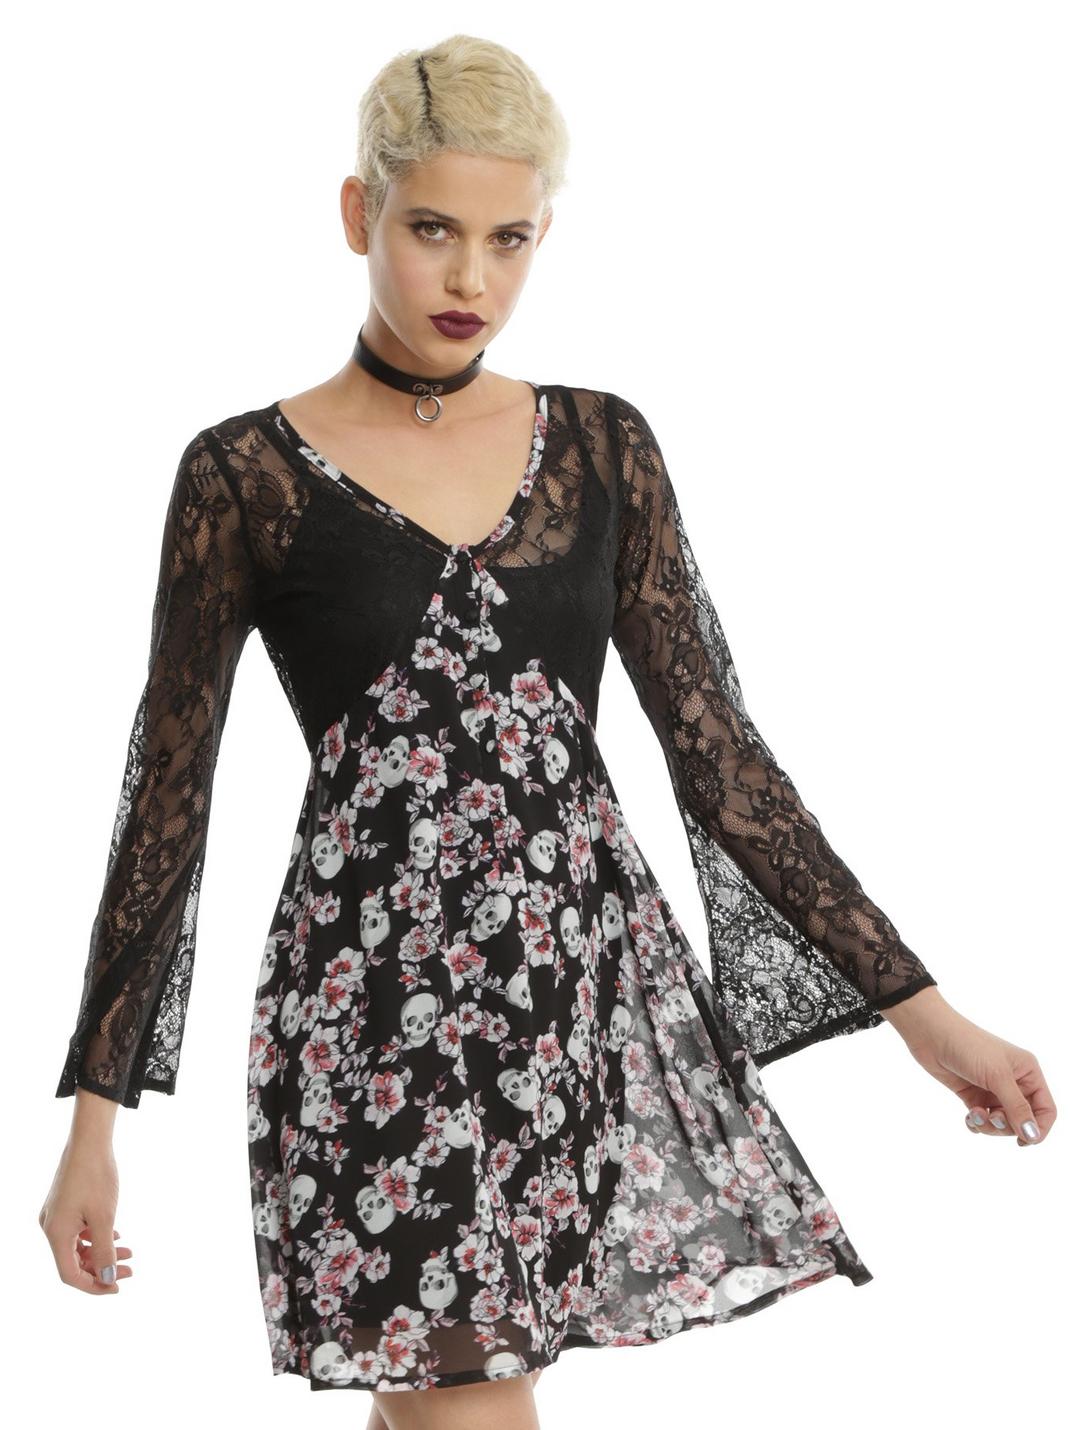 Skull Floral Black Lace Bell Sleeve Chiffon Dress, BLACK, hi-res